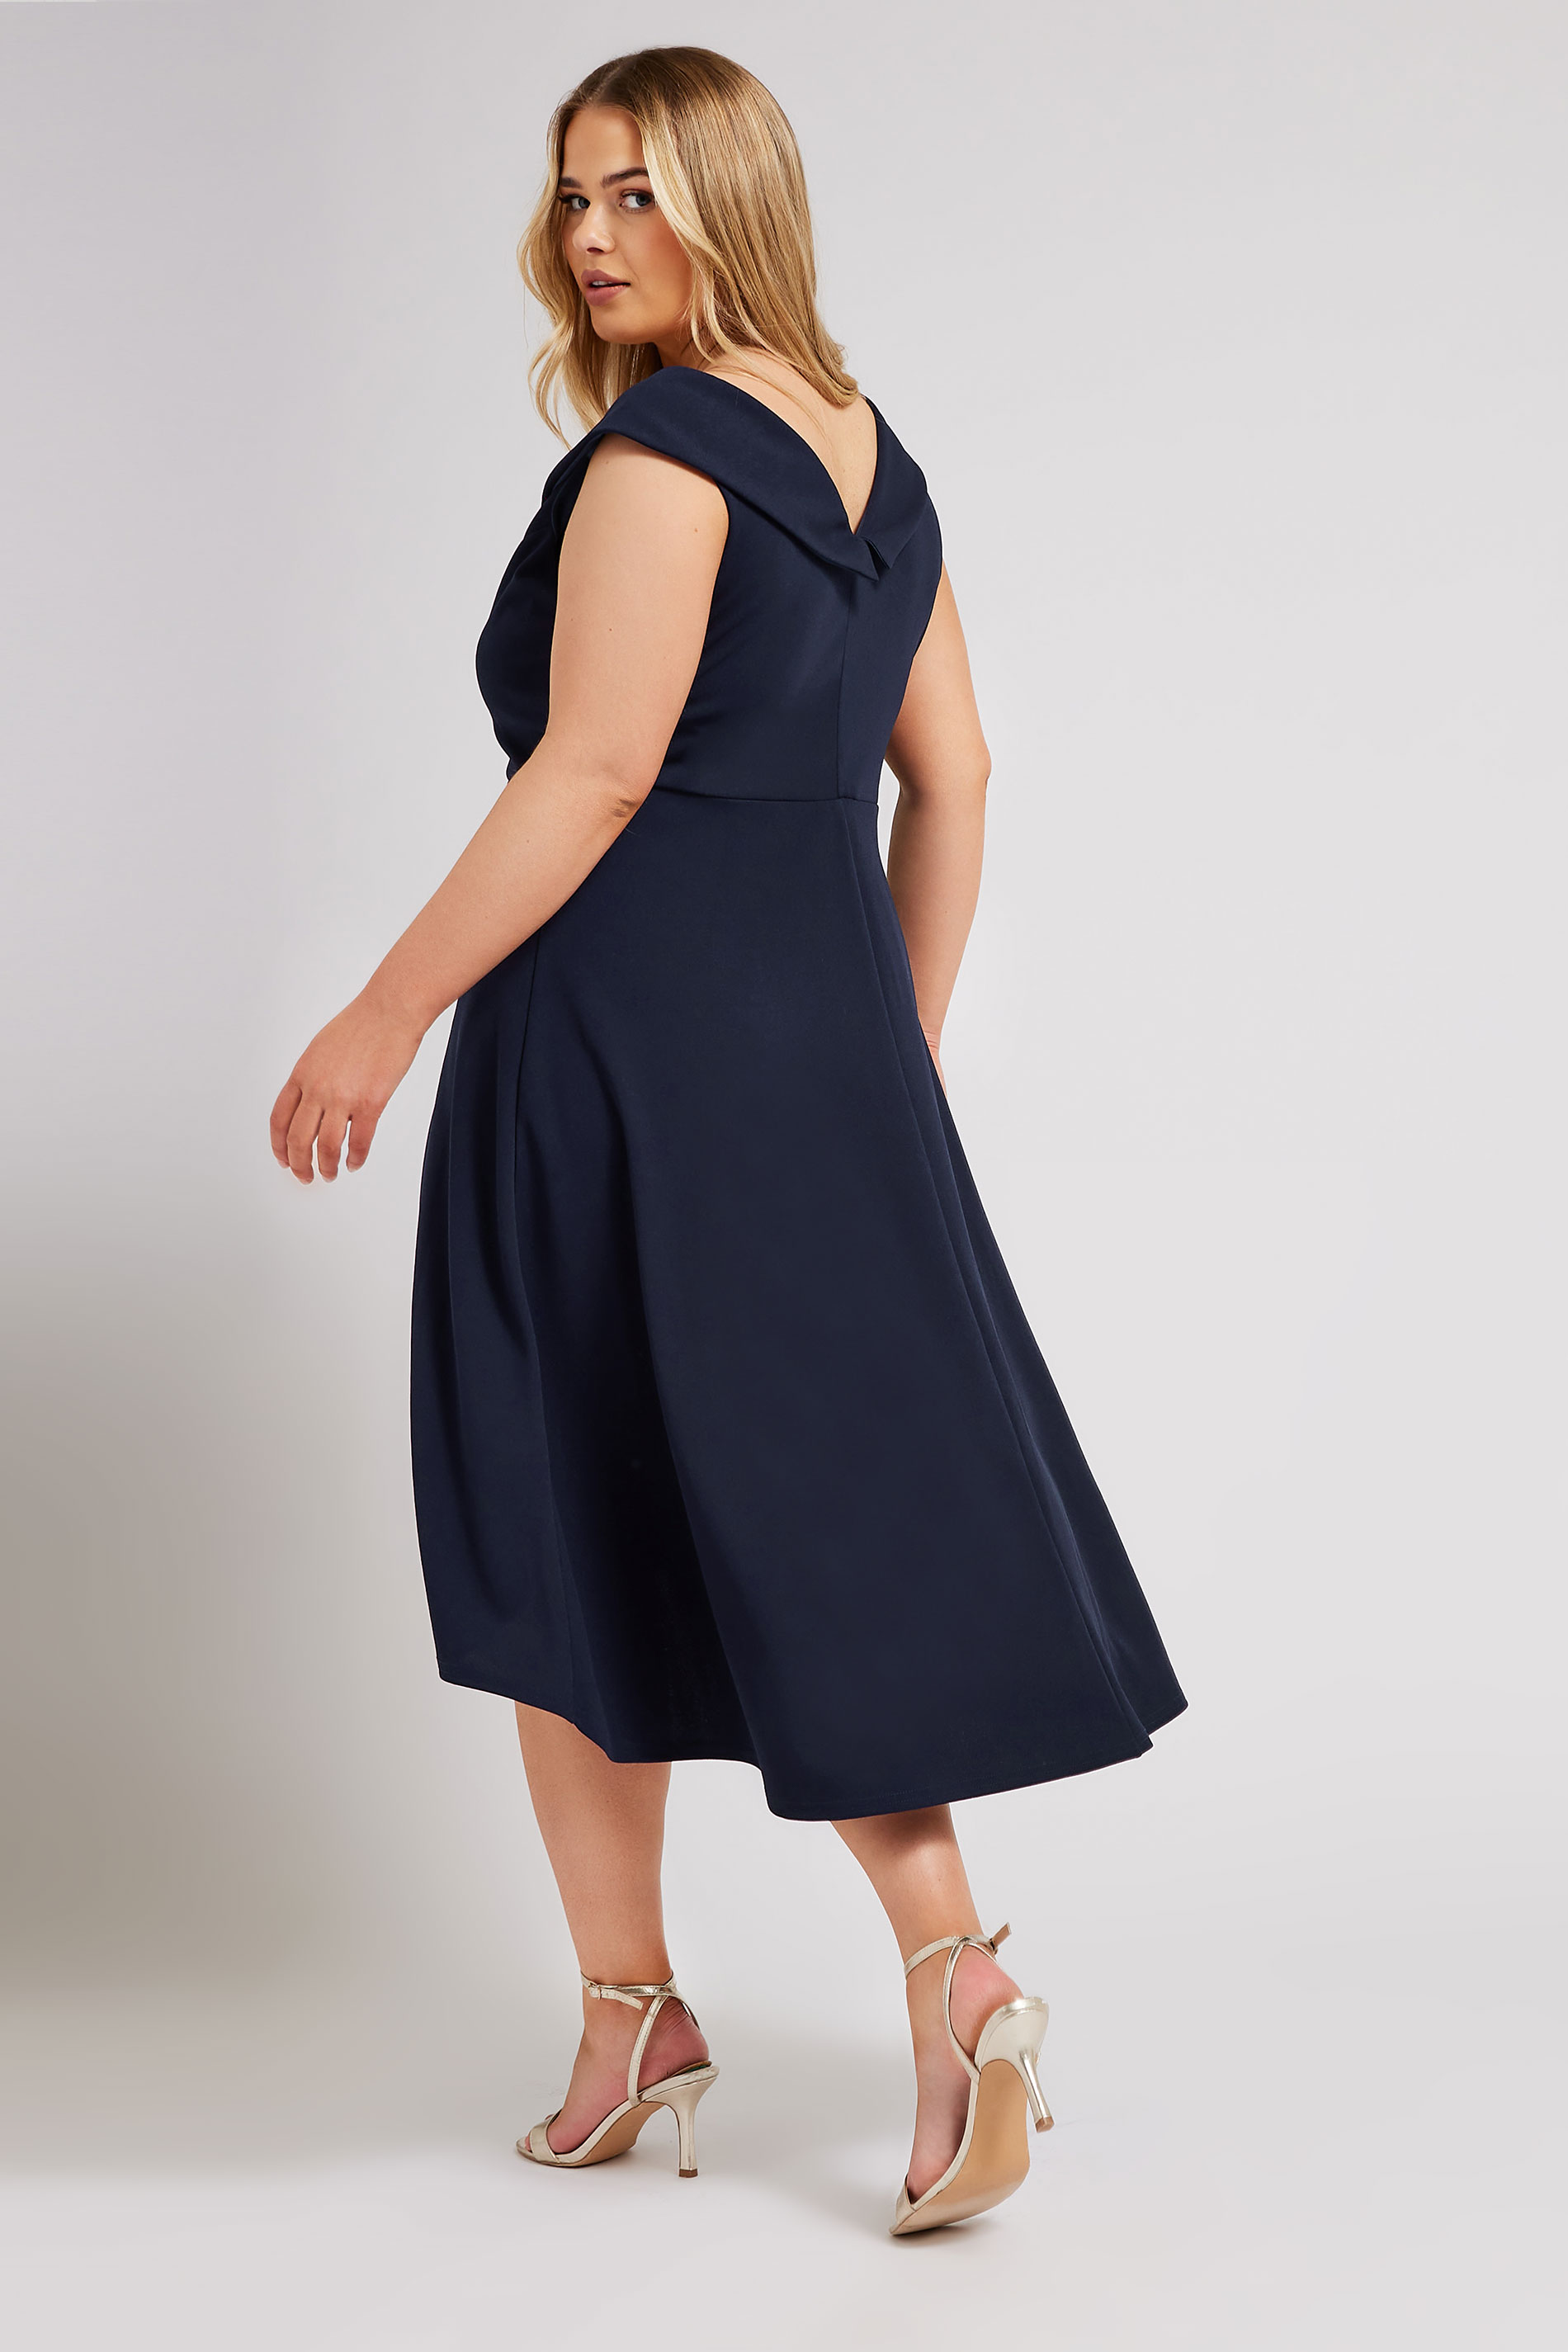 YOURS LONDON Plus Size Navy Blue Tuxedo Style Dress | Yours Clothing 3